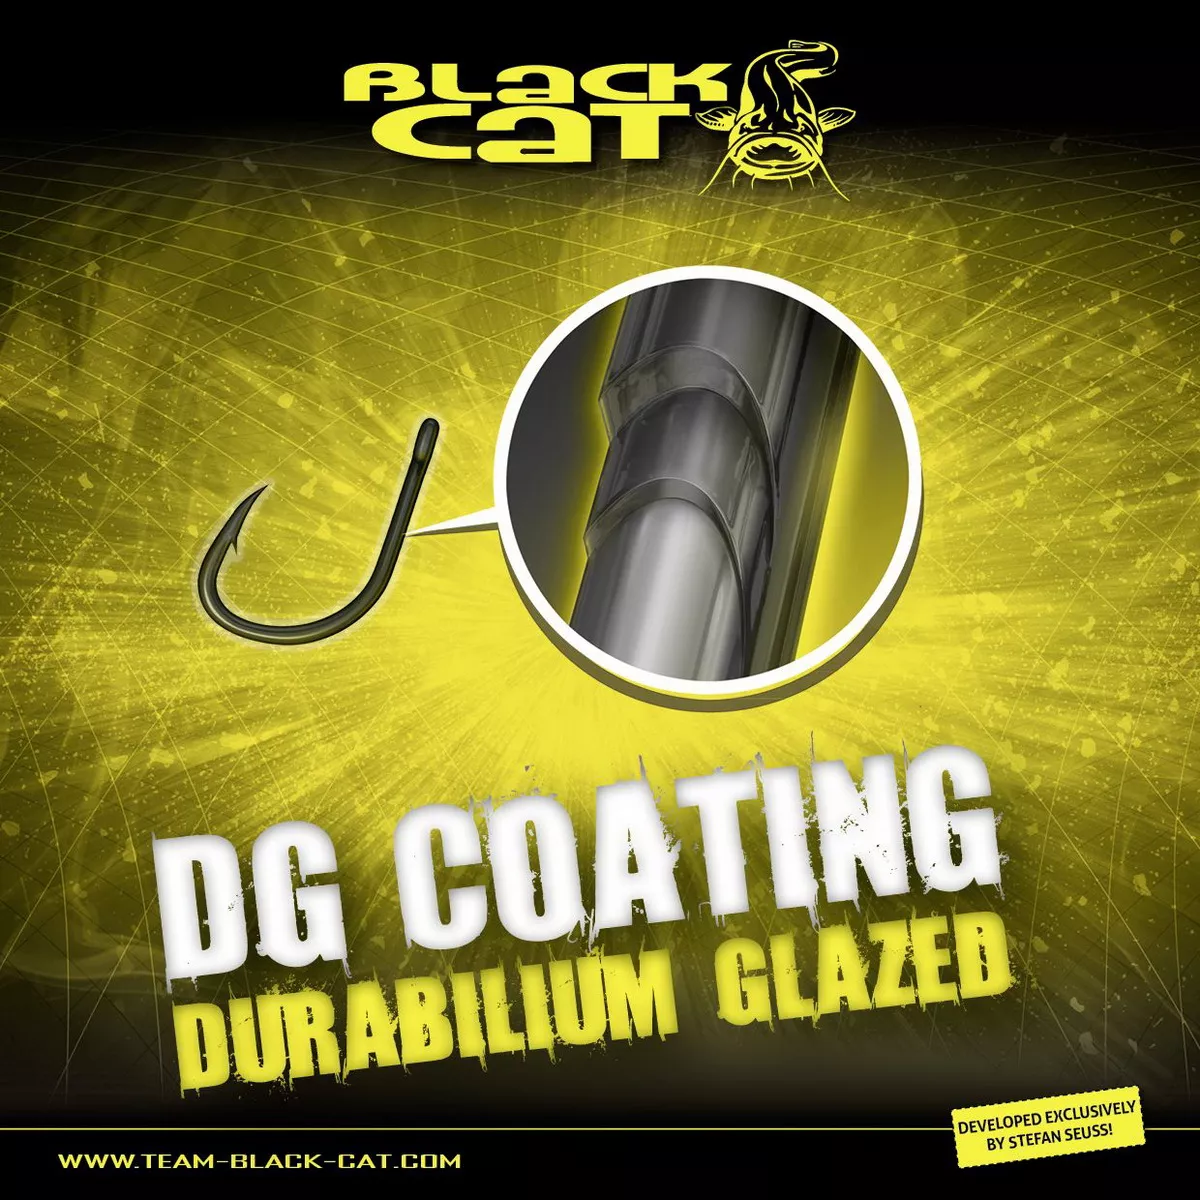 BLACK CAT 1 Curved Point Drilling DG DG coating